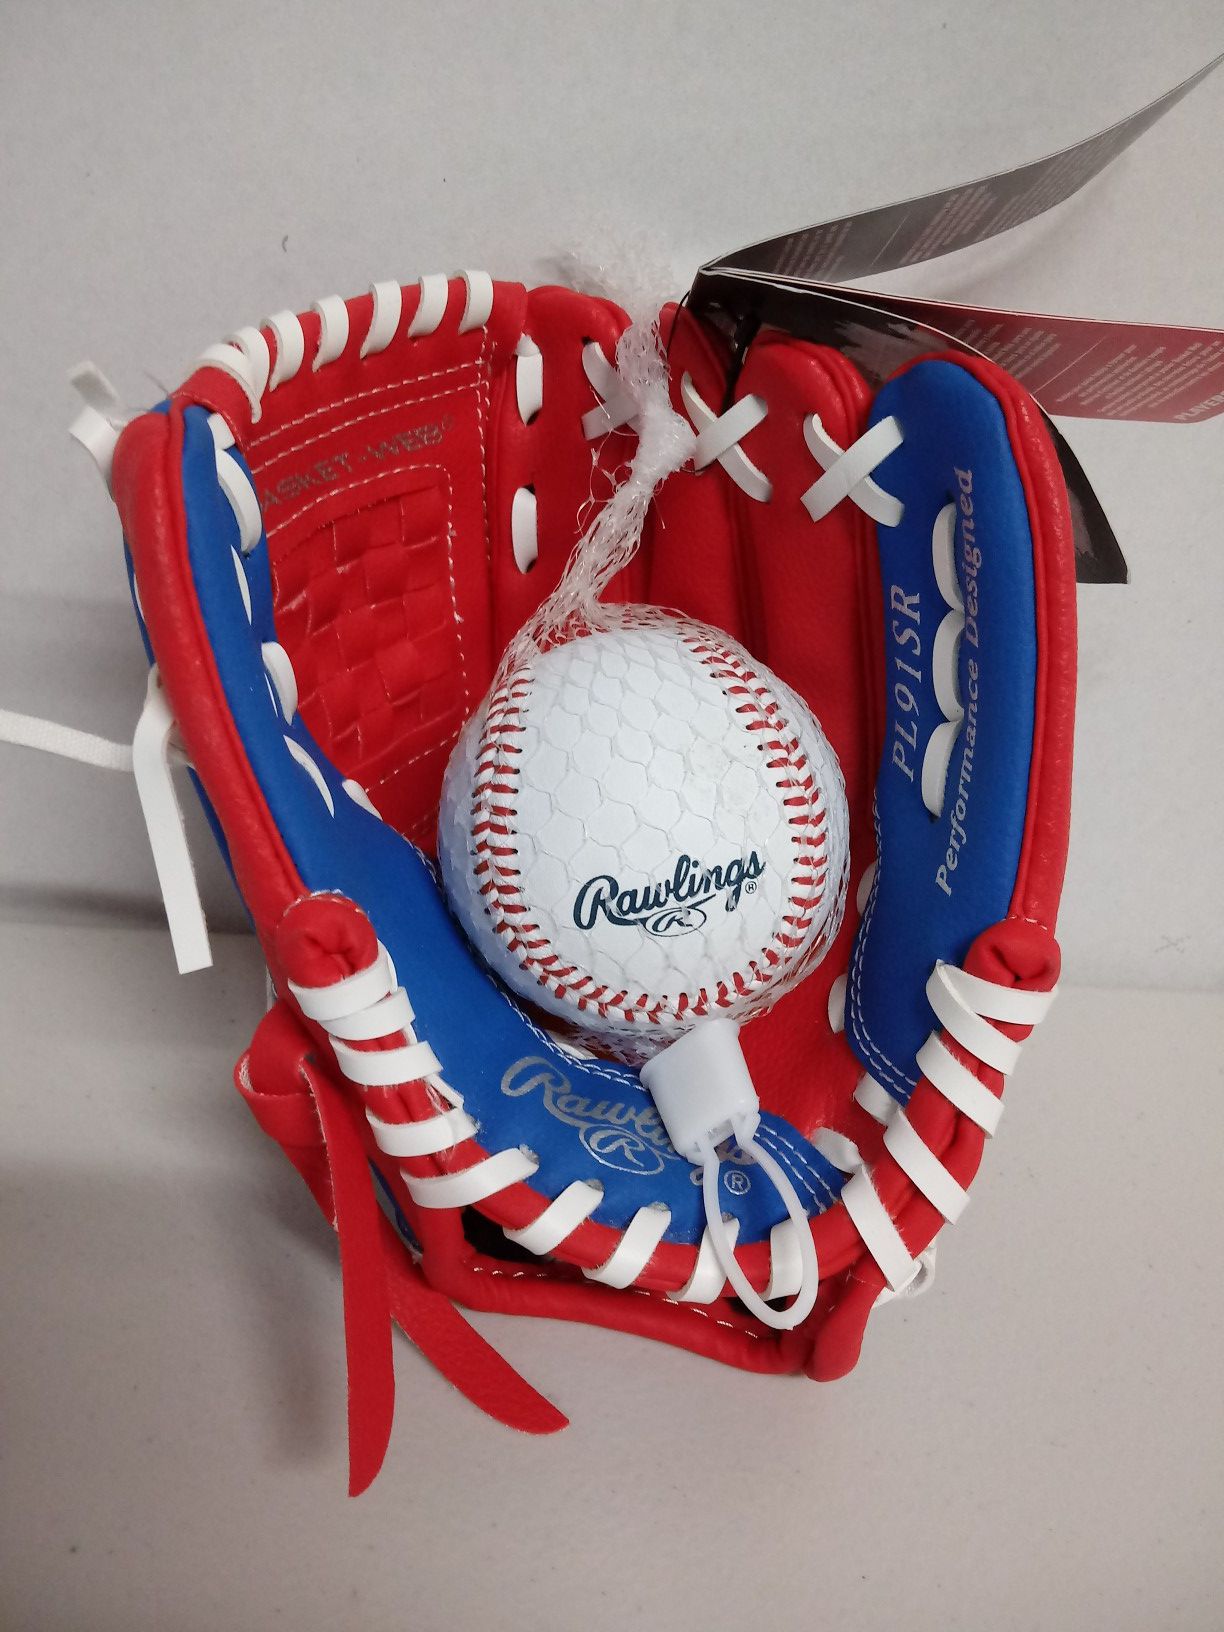 Rawlings Players Series Youth Tball/Baseball Glove with ball